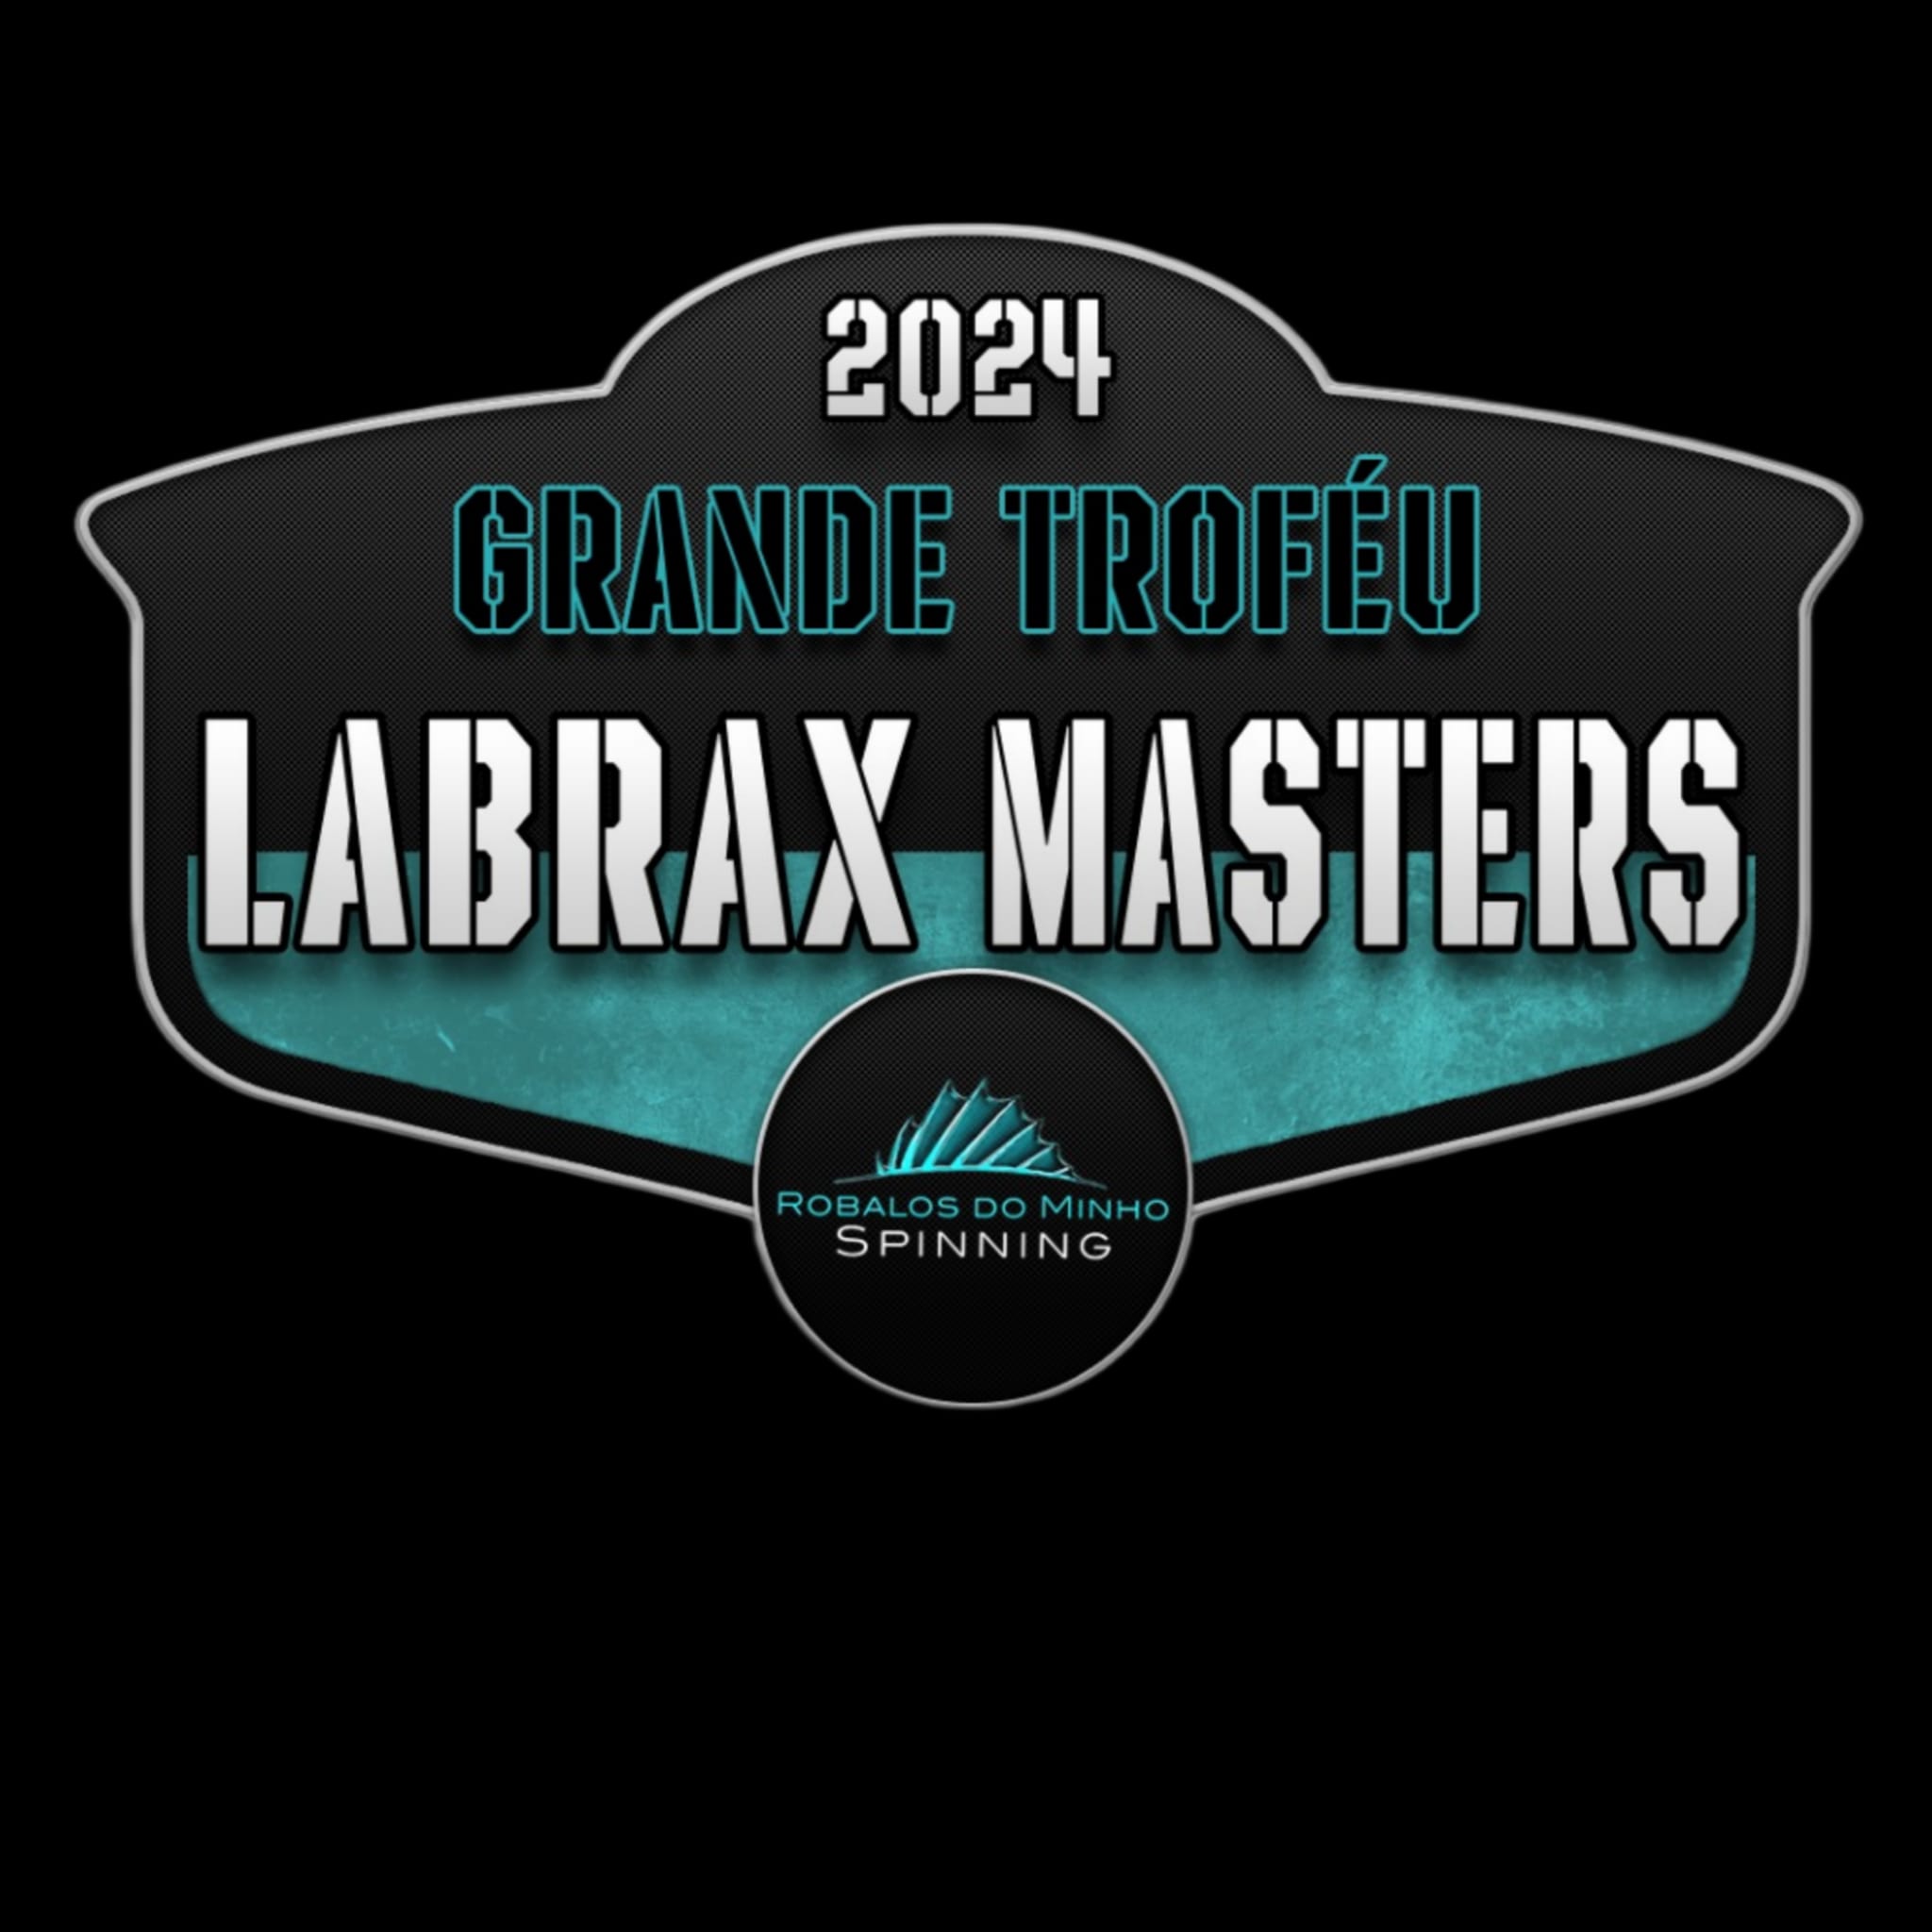  Grande Troféu Labrax Masters